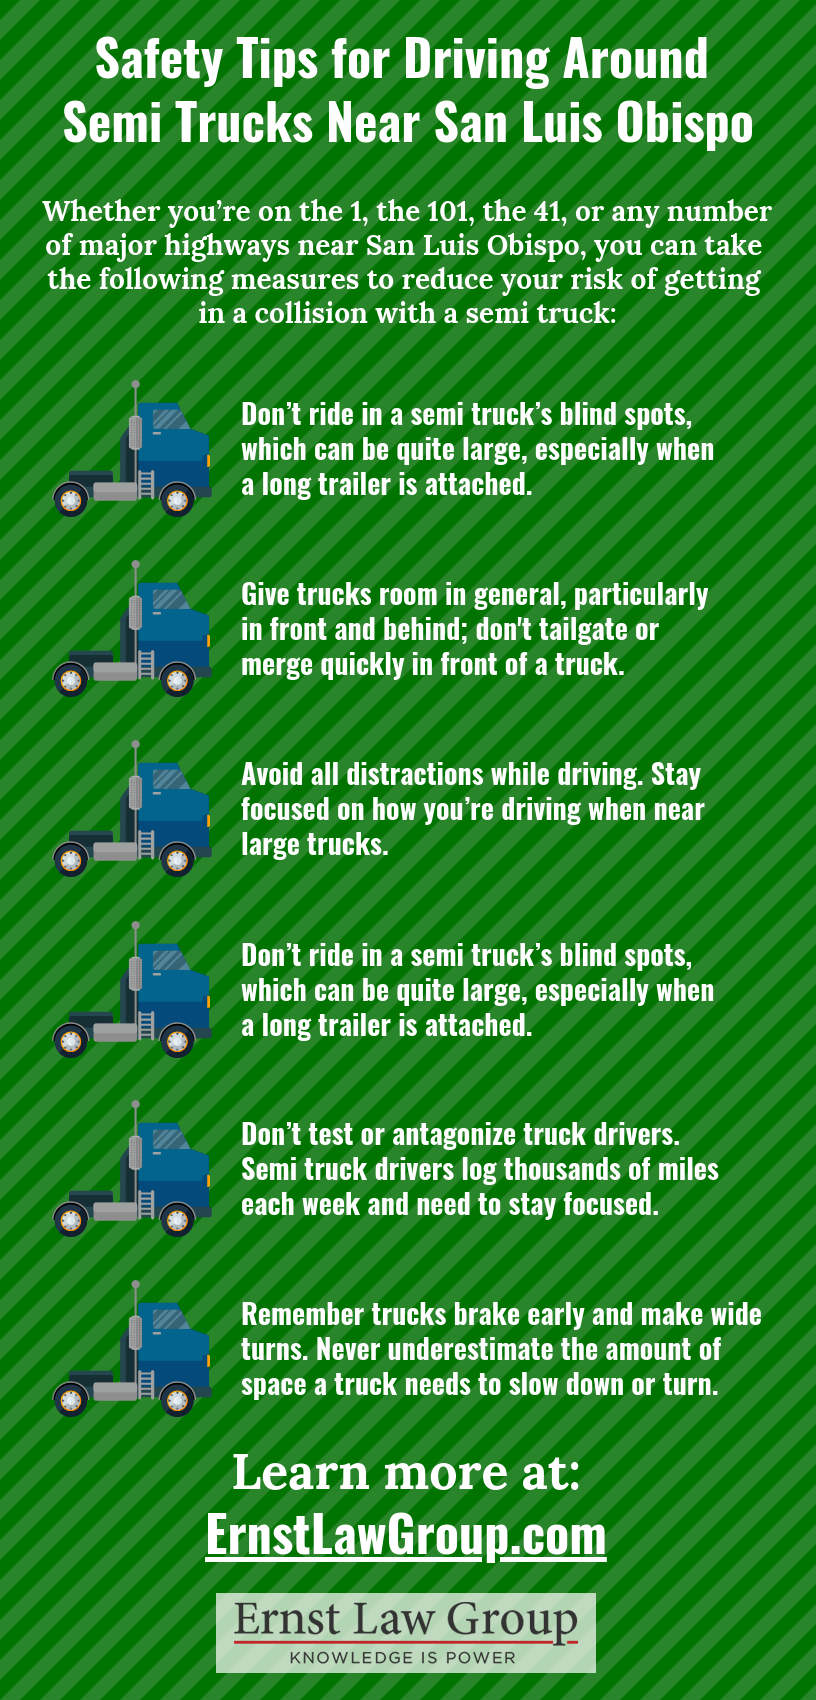 Safety Tips for Driving Around Semi Trucks Near San Luis Obispo